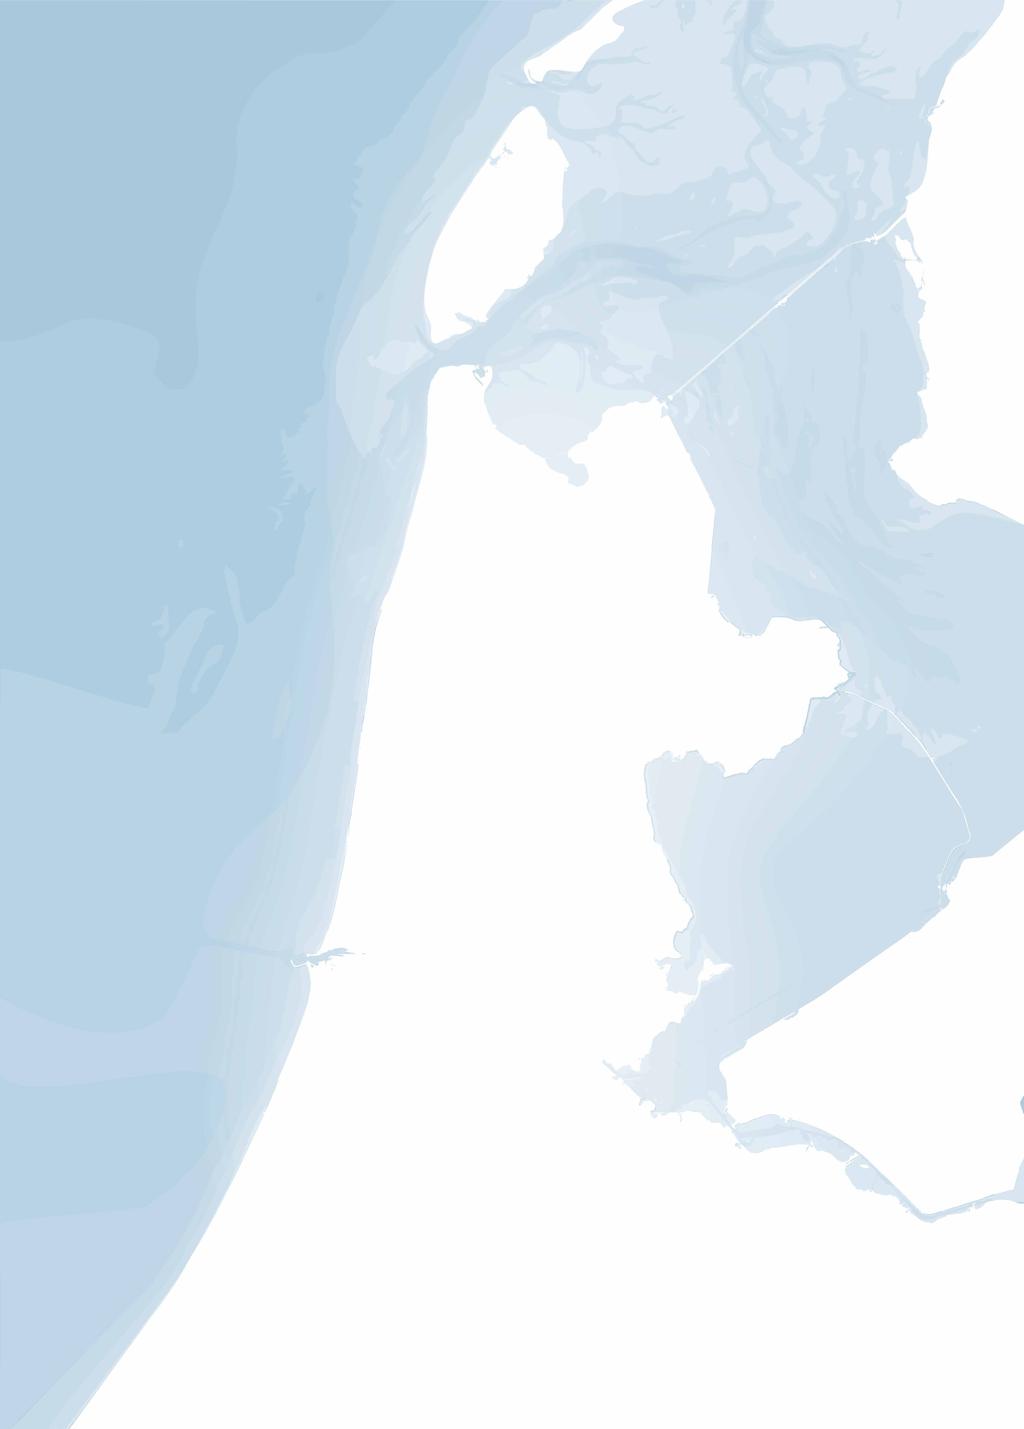 Westfriese Omringdijk Provincie Noord-Holland 5 OVERZICHTSKAART WESTFRIESE OMRINGDIJK